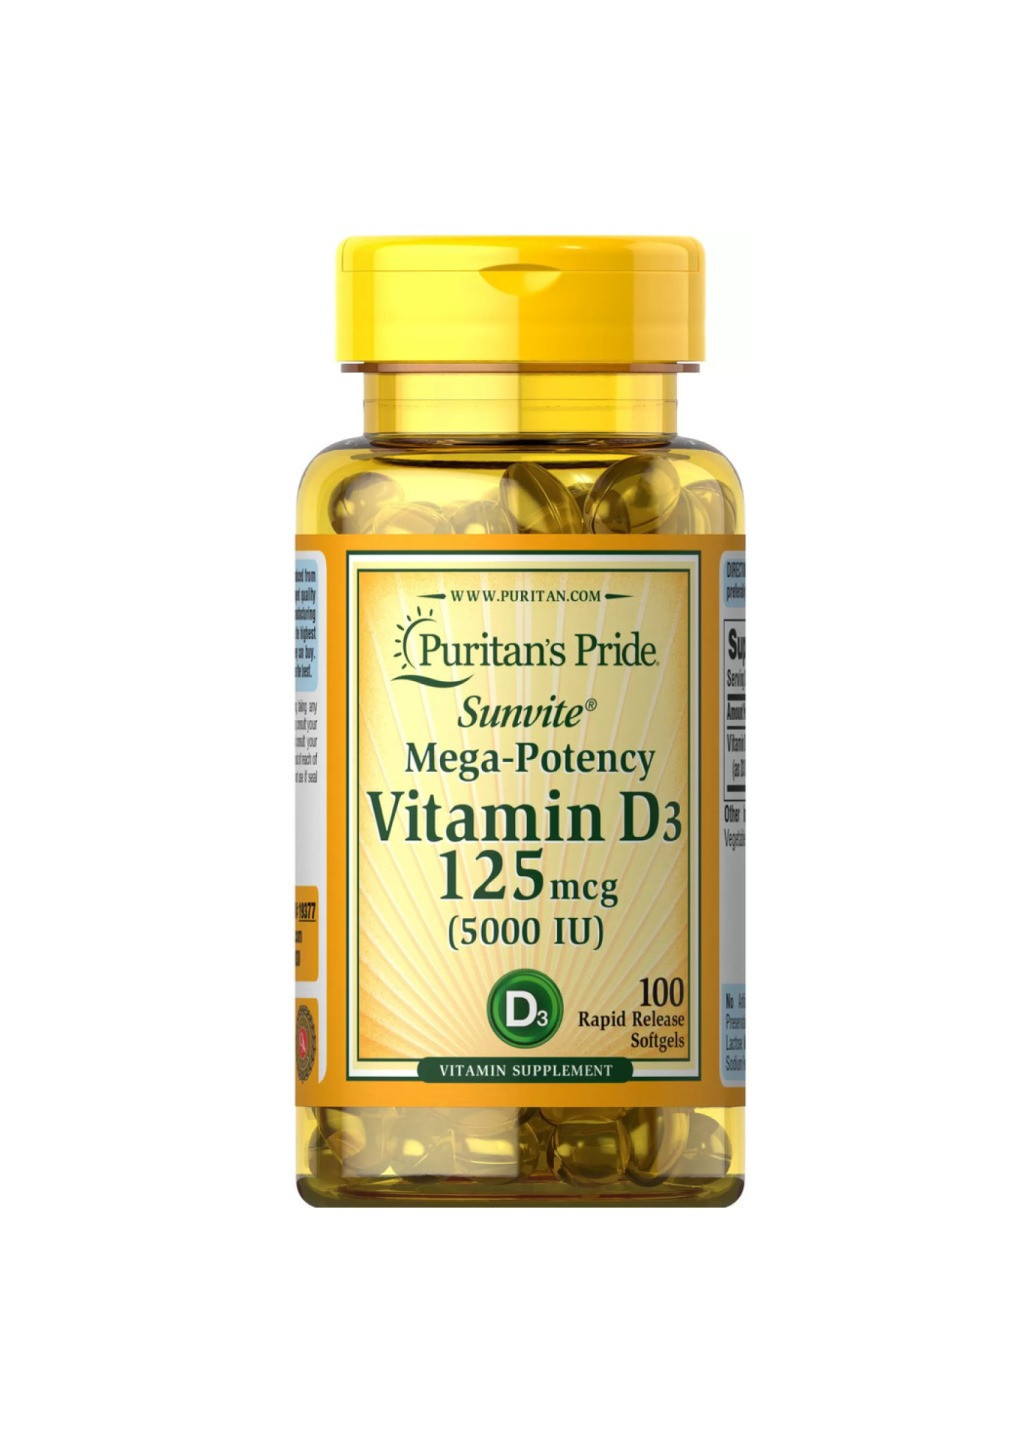 Vitamin D-3 125mcg (5000 IU) Sunvite Mega Potency - 100 tabs Puritans Pride (258191704)